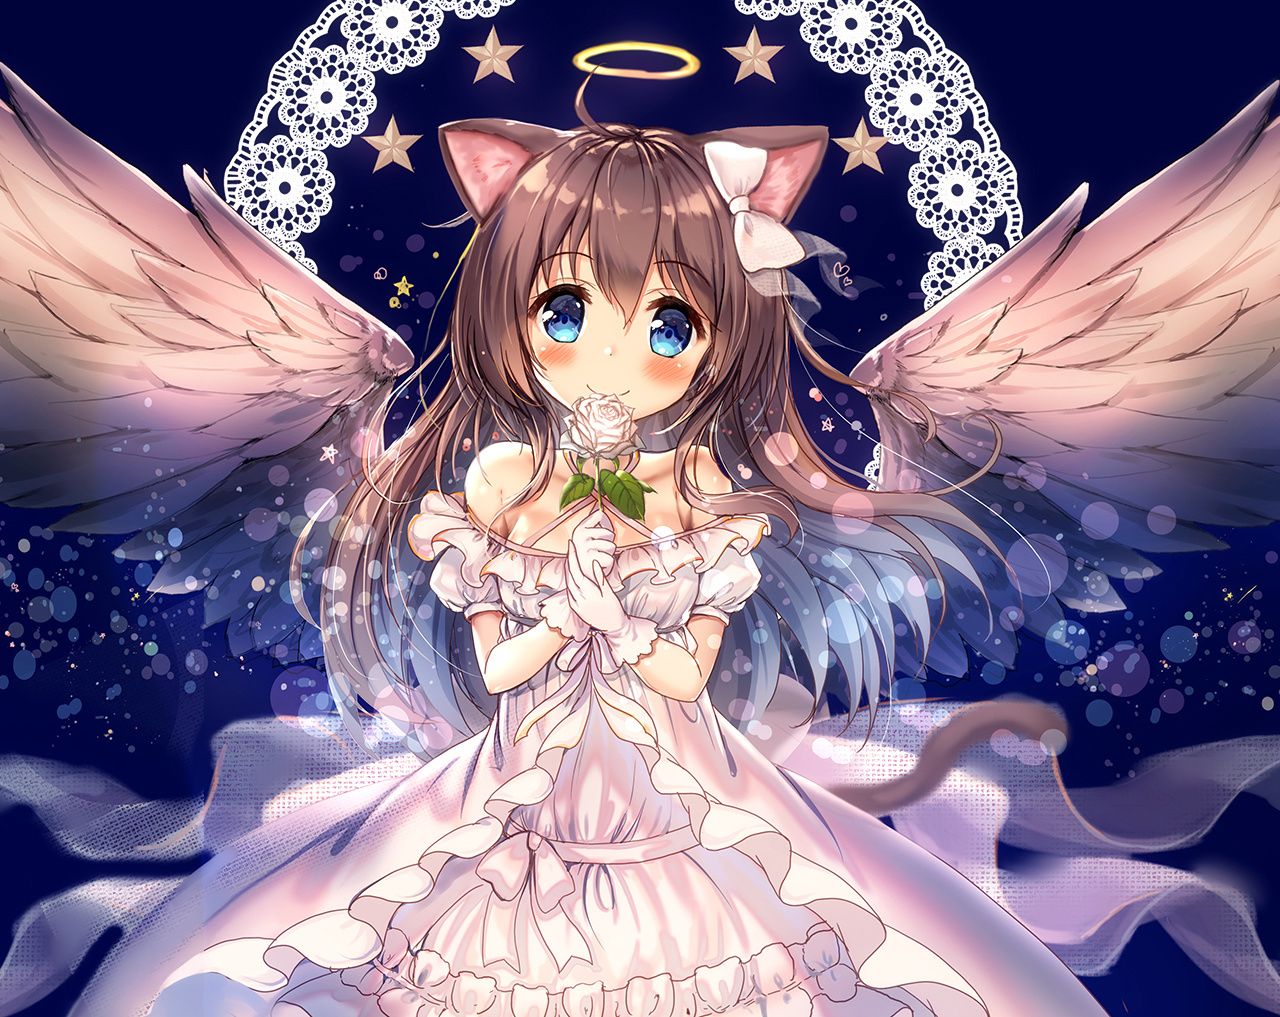 Cute anime Angel by AI-NIJI on DeviantArt